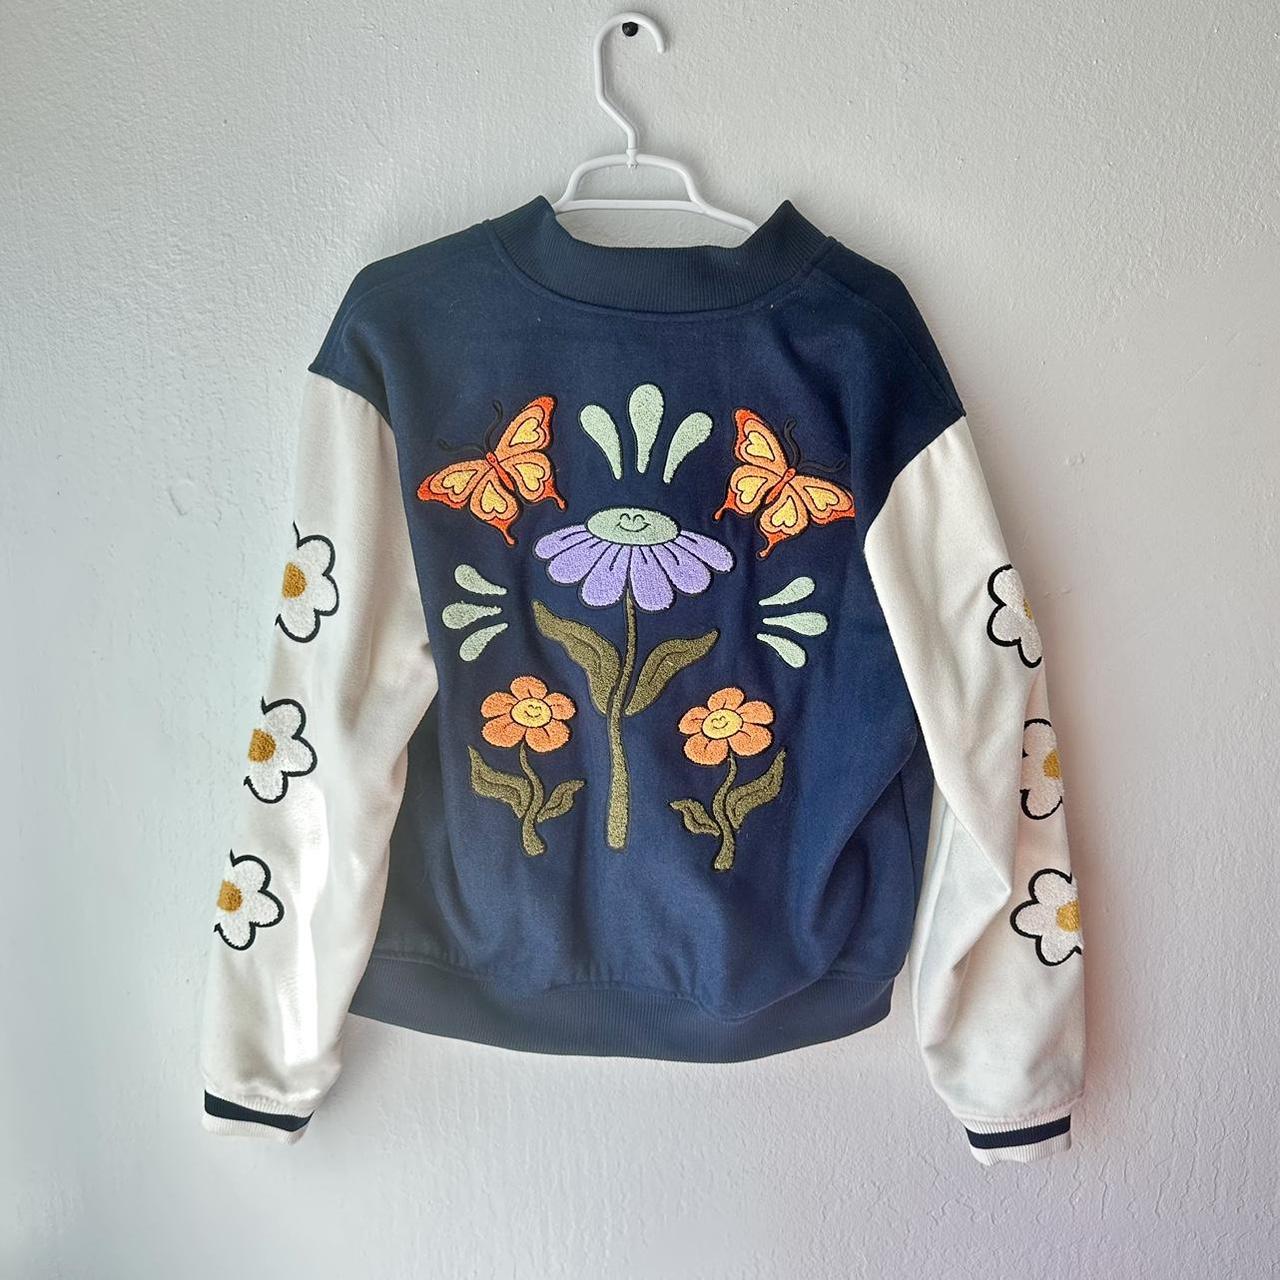 PacSun Flower Embroidered Navy Varsity Jacket!